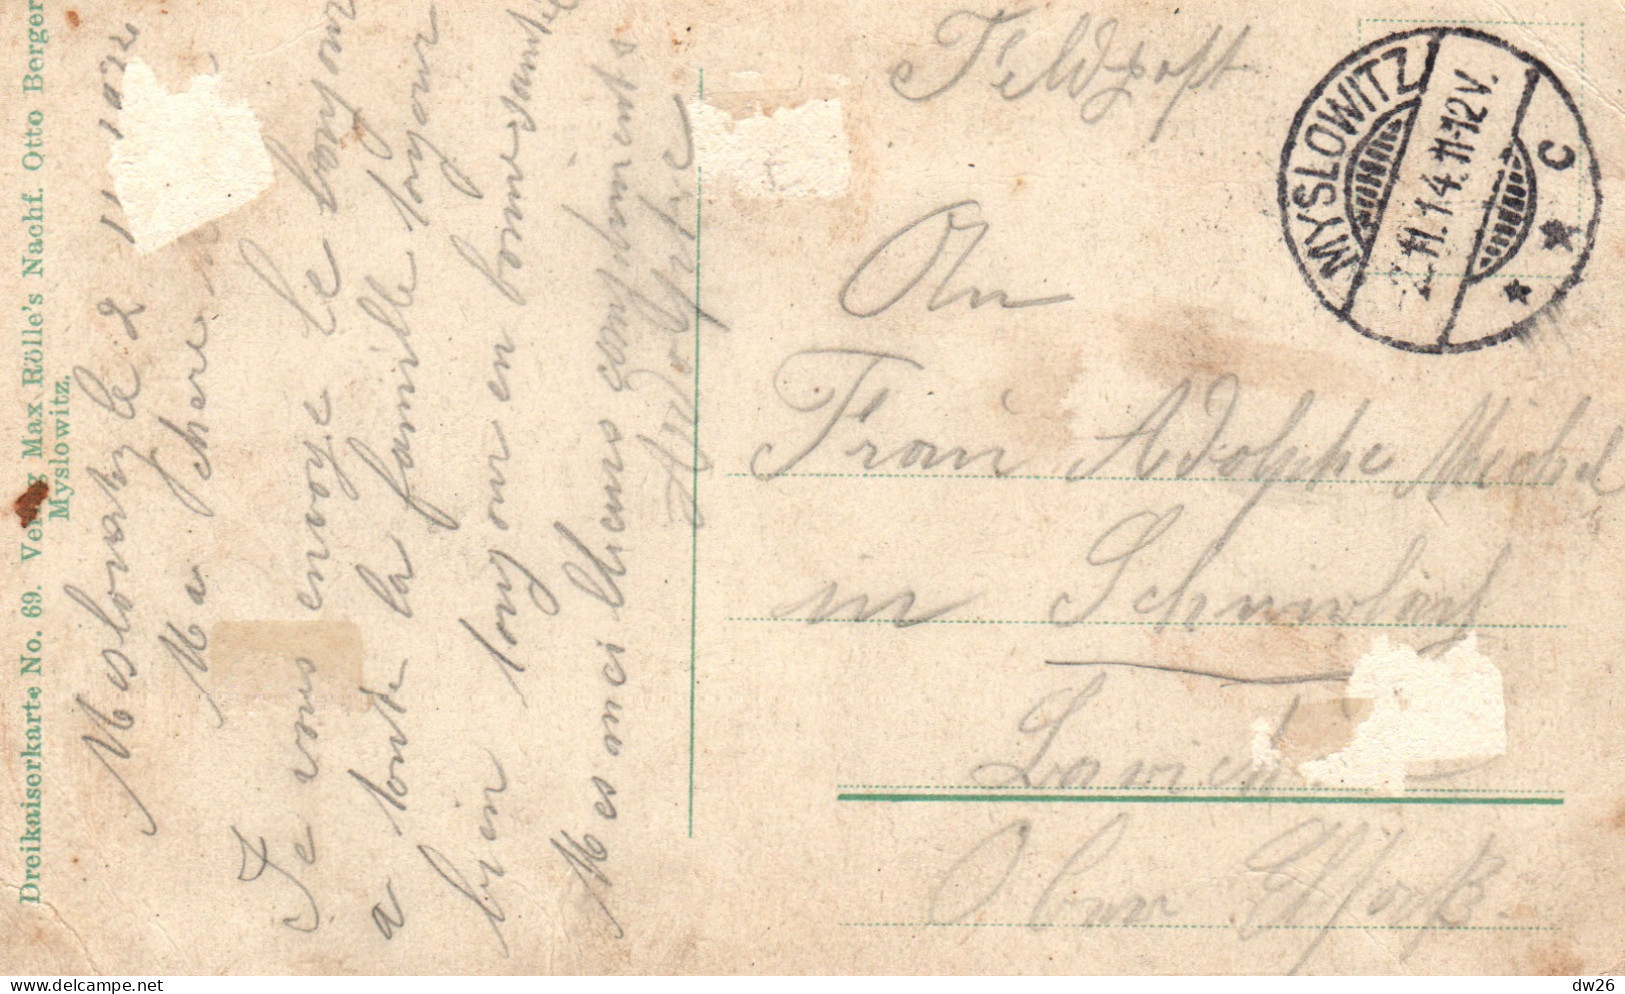 Représentation De Timbres: Stamps Deutschland, Russland, Osterreich, Bismarckturm - Lithographie 1914 - Stamps (pictures)